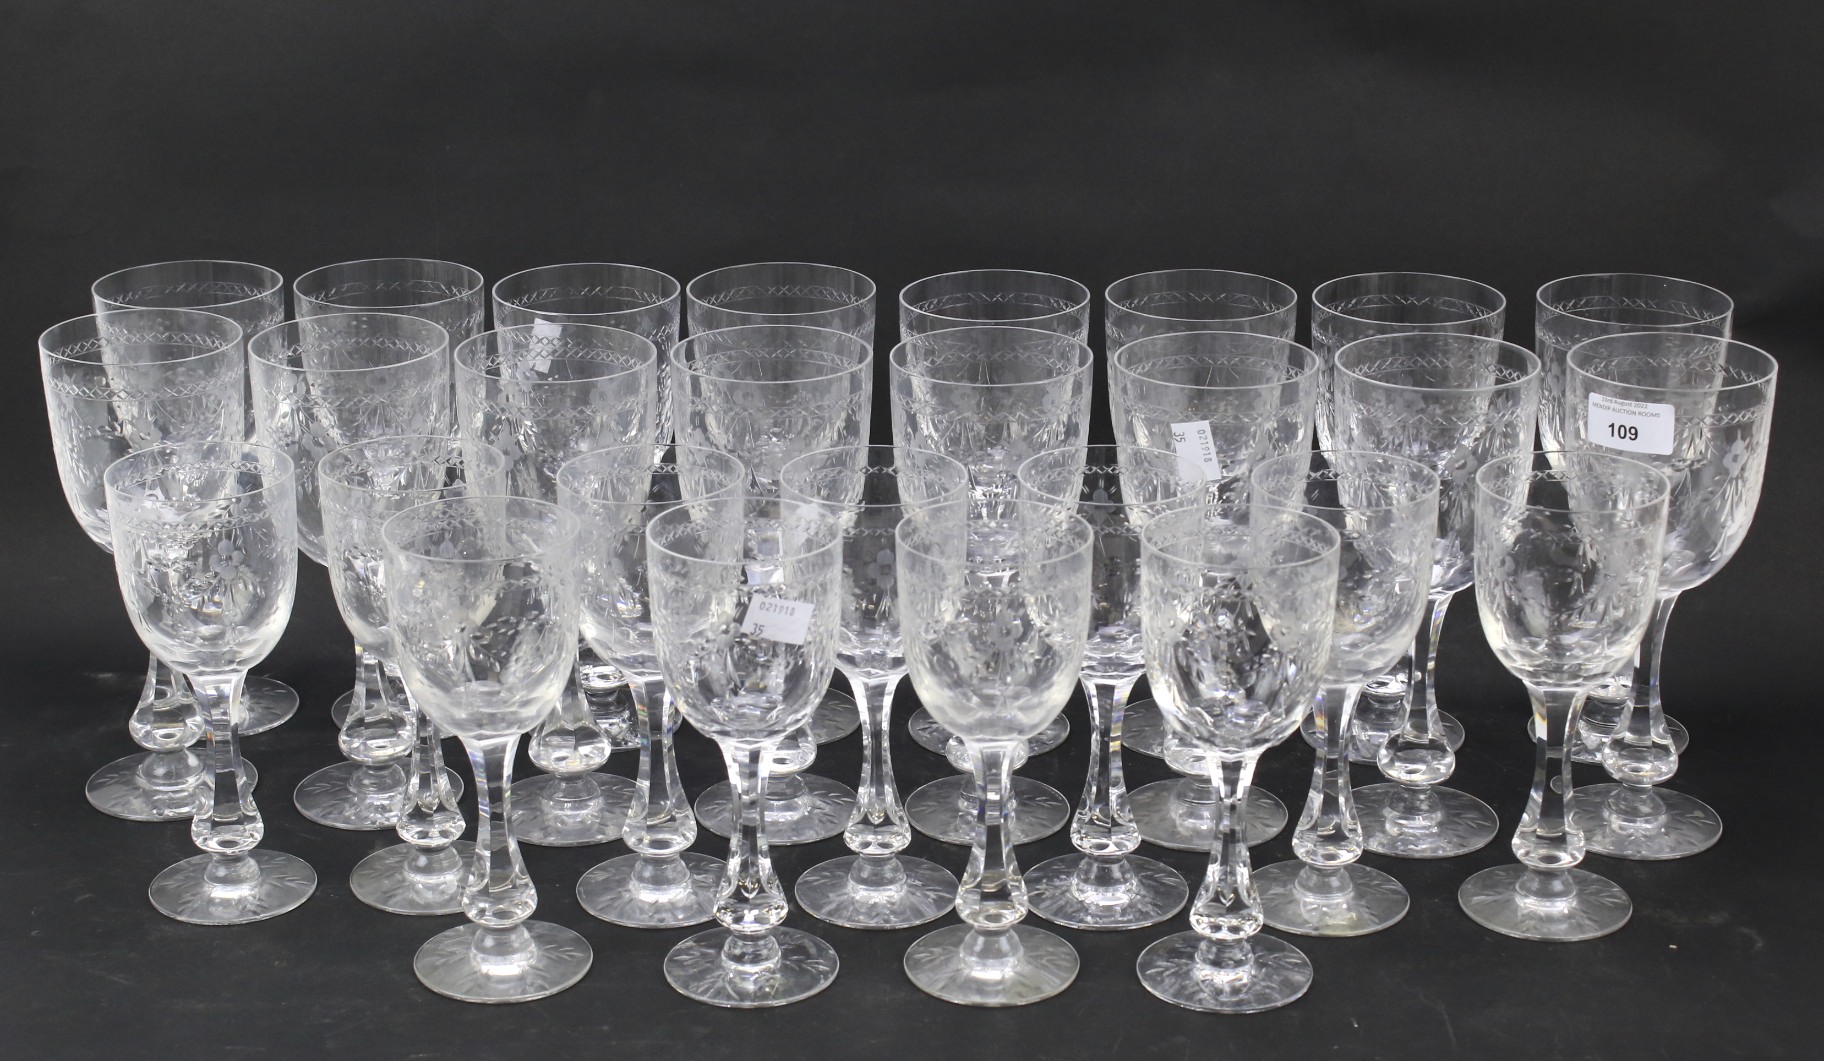 A set of contemporary wine glasses.